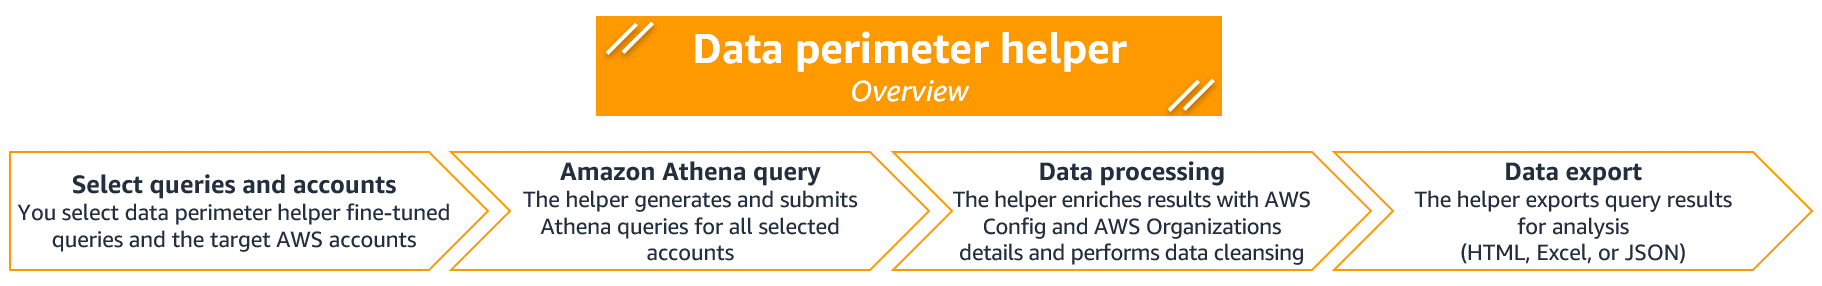 Data perimeter helper overview